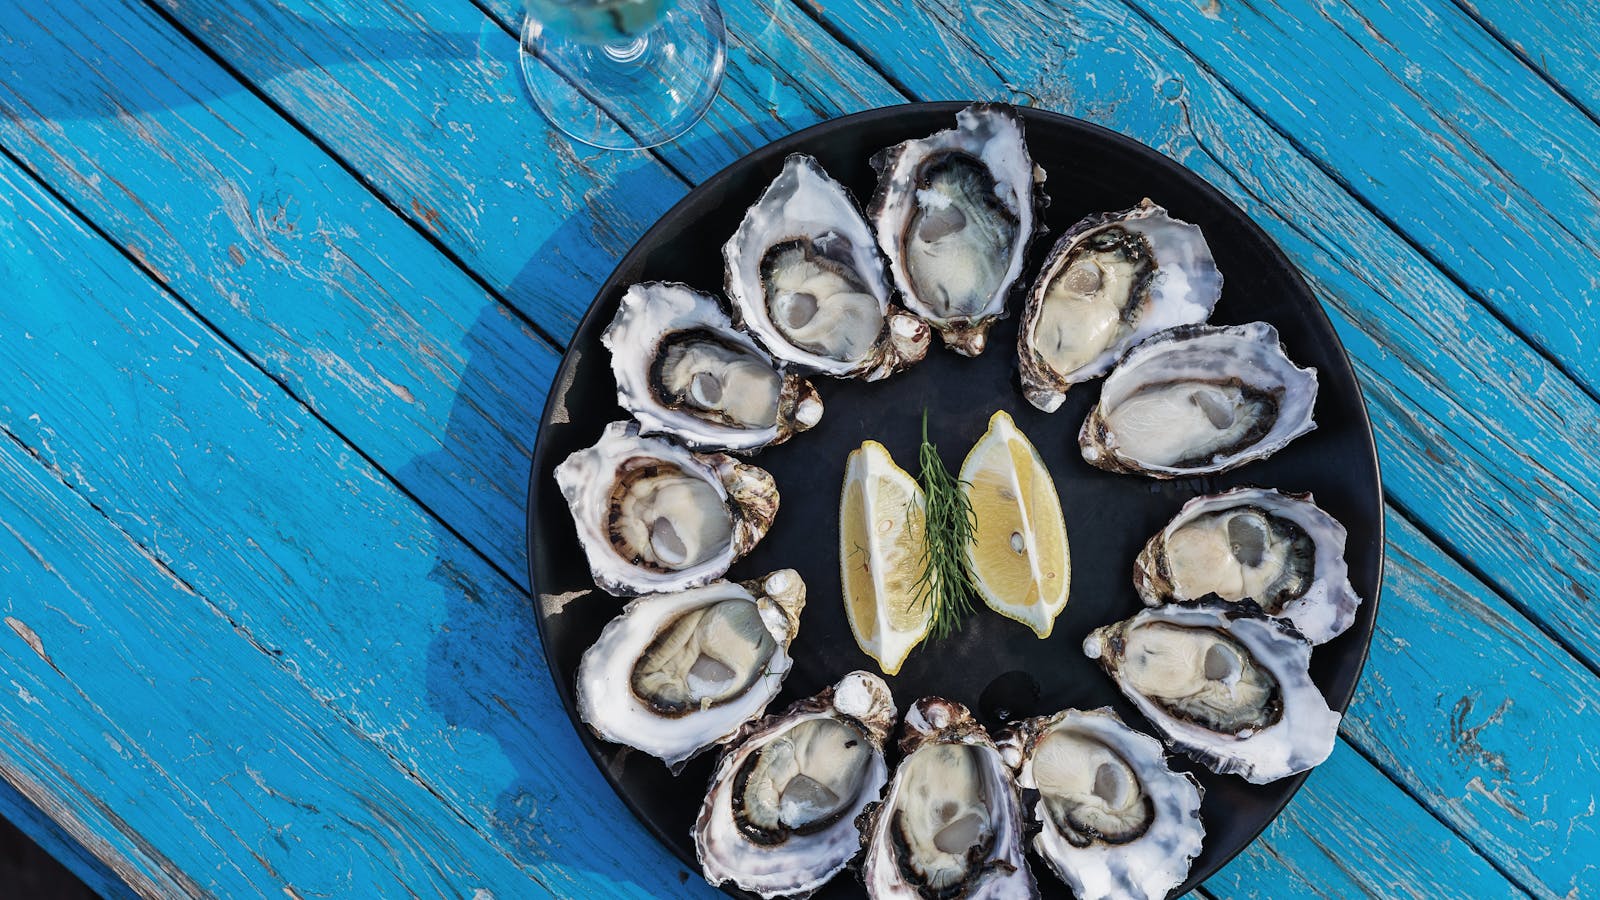 Feast on fresh Tasmanian produce like these Bruny Island Oysters with Adventure Trails Tasmania